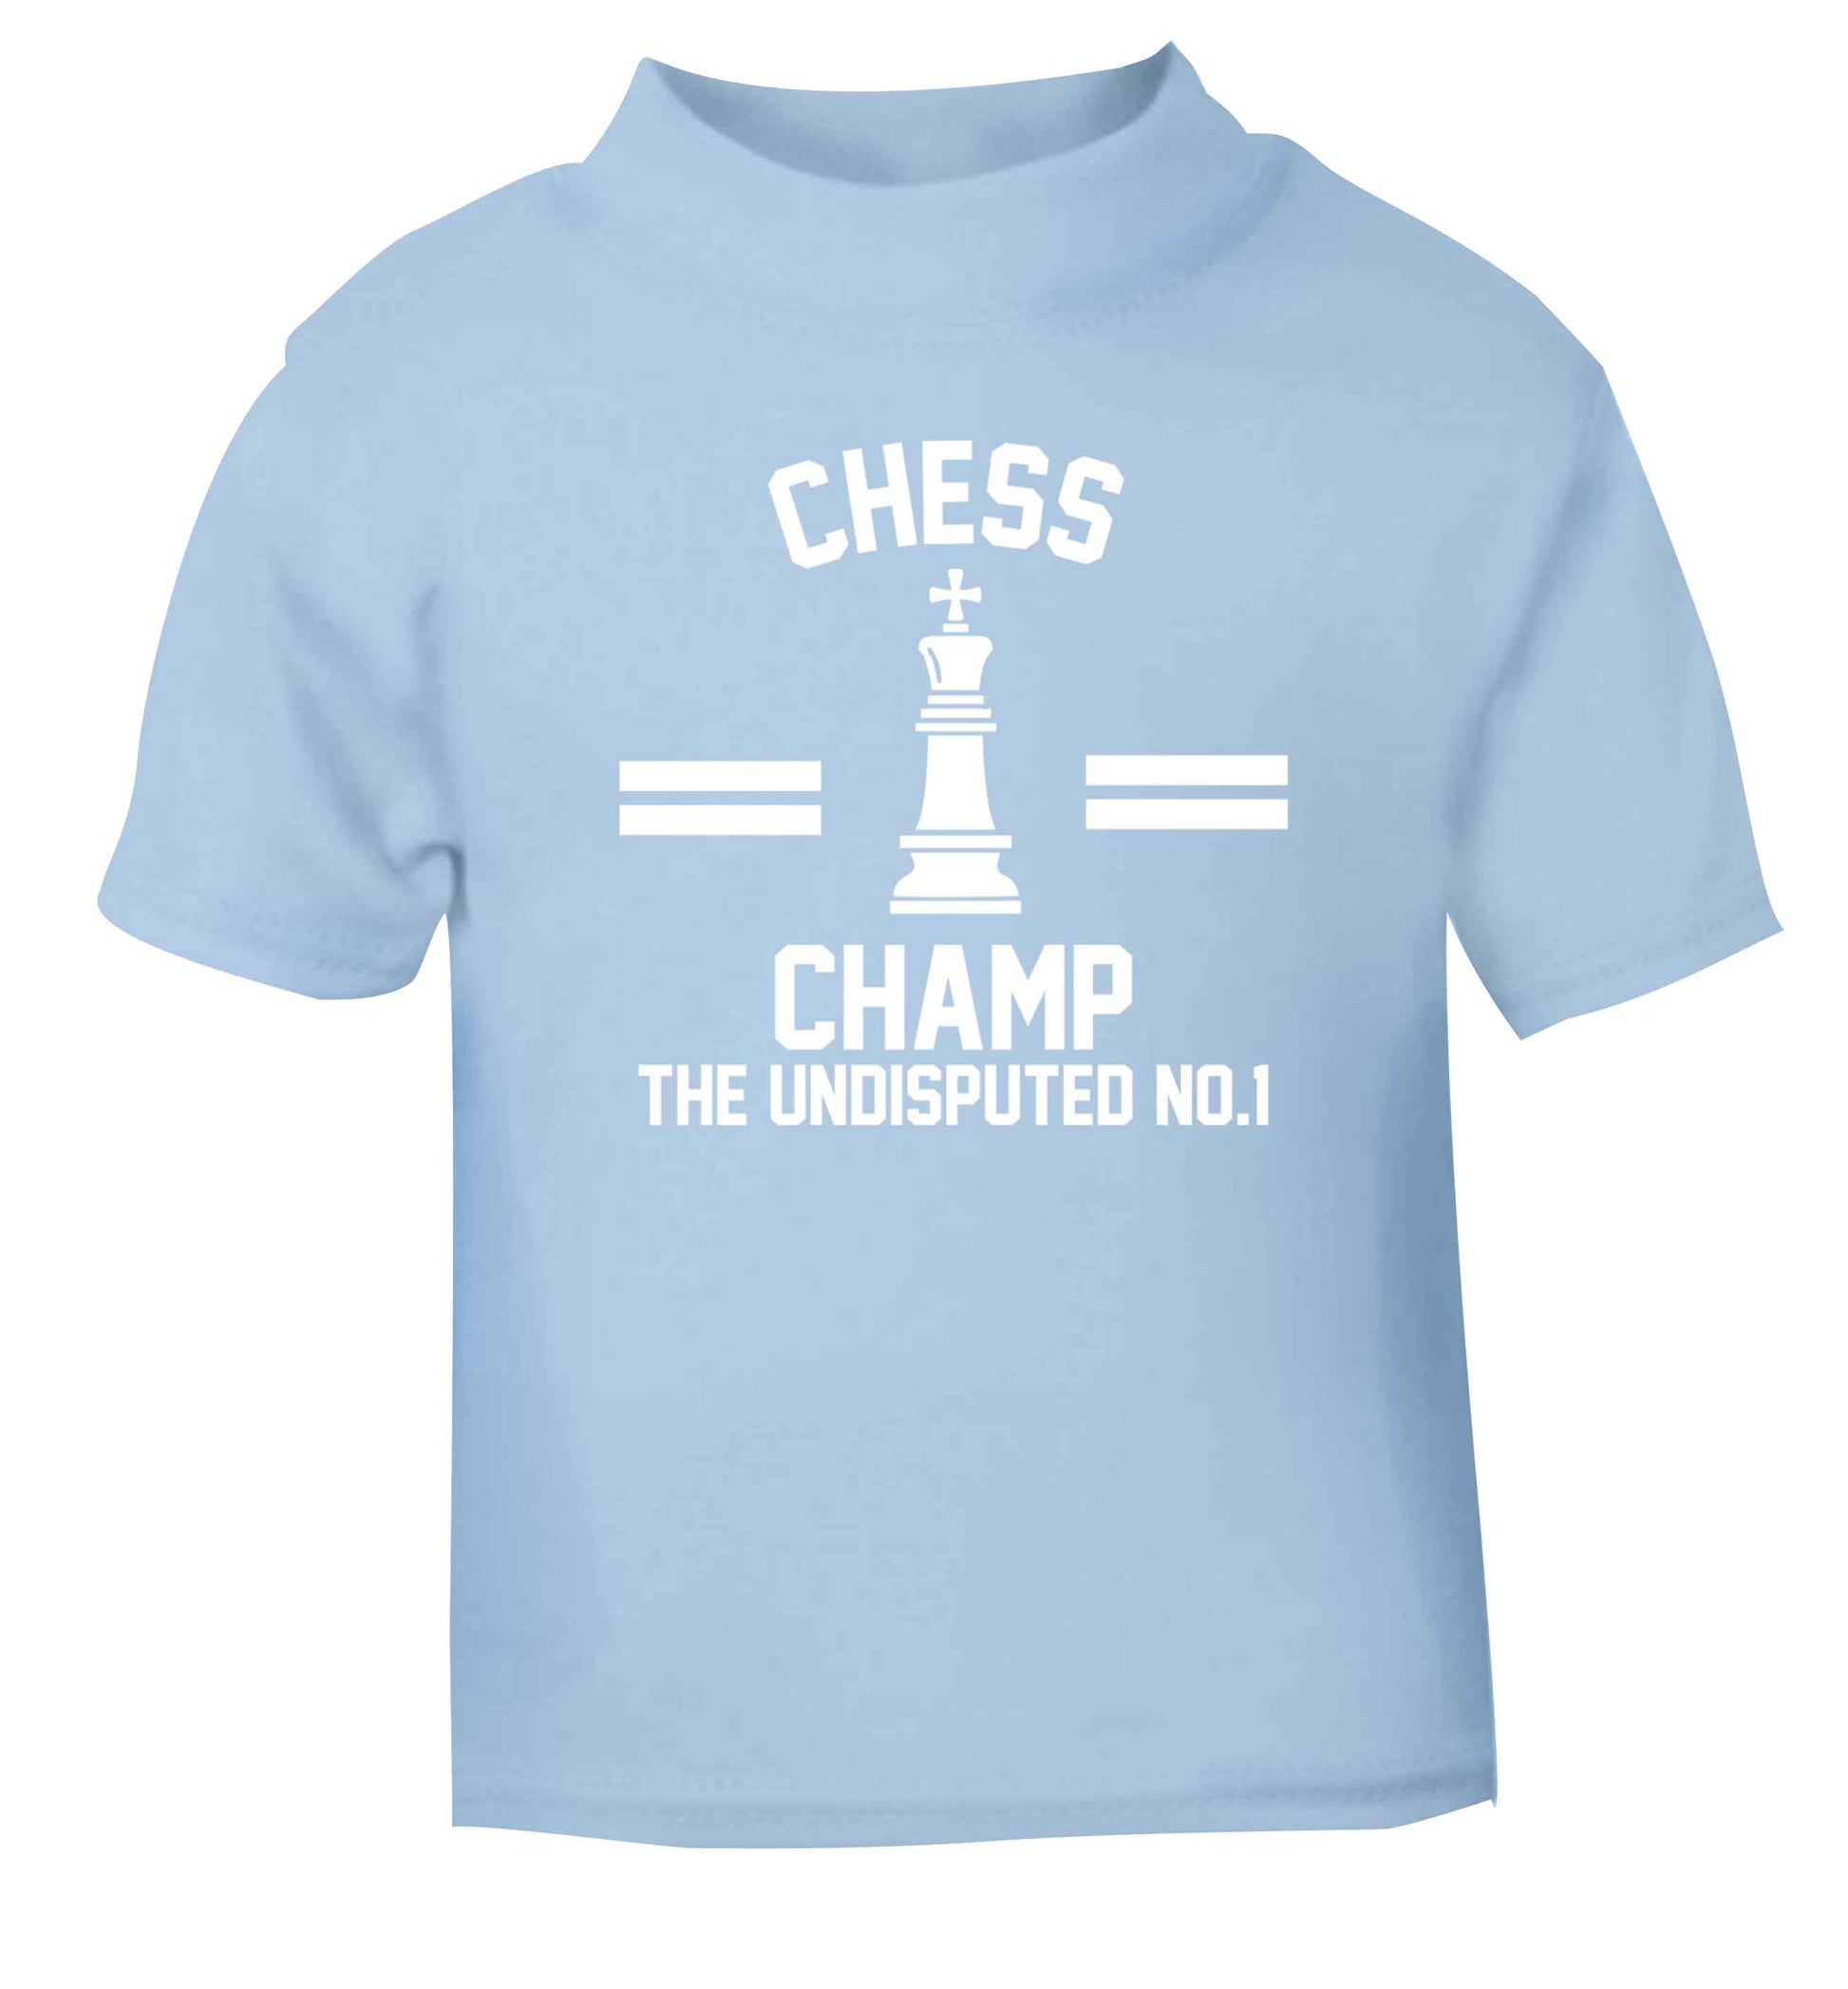 Undisputed chess championship no.1  light blue Baby Toddler Tshirt 2 Years